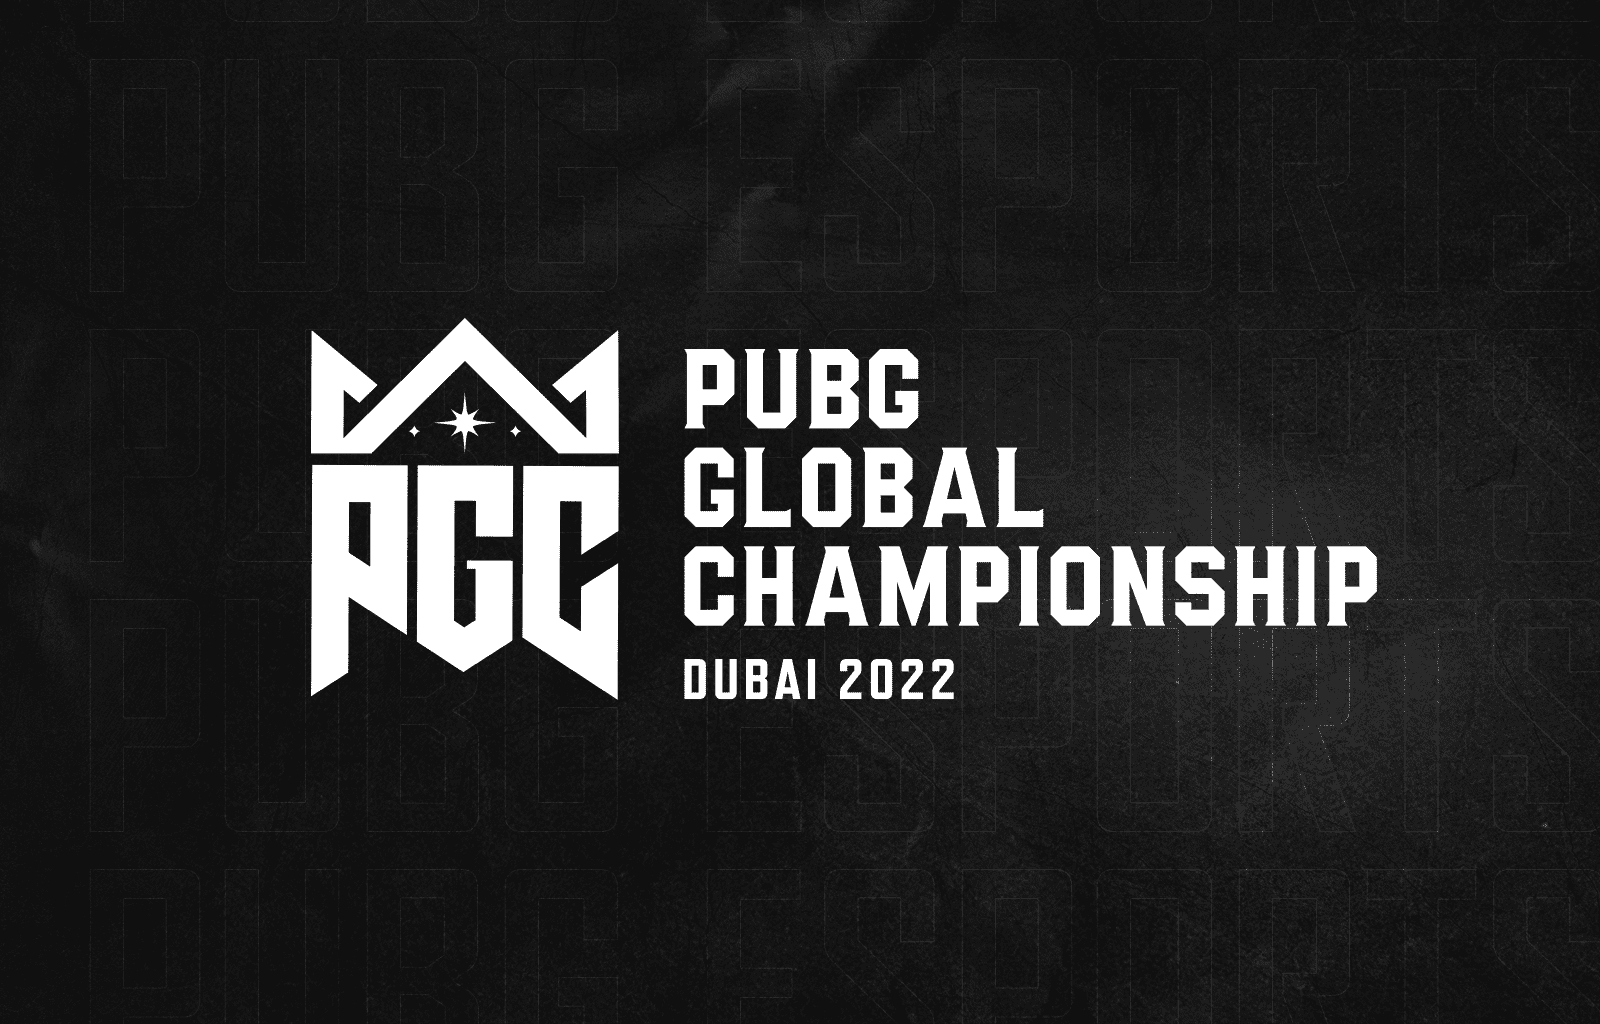 PUBG Global Championship Betting, Odds, Teams